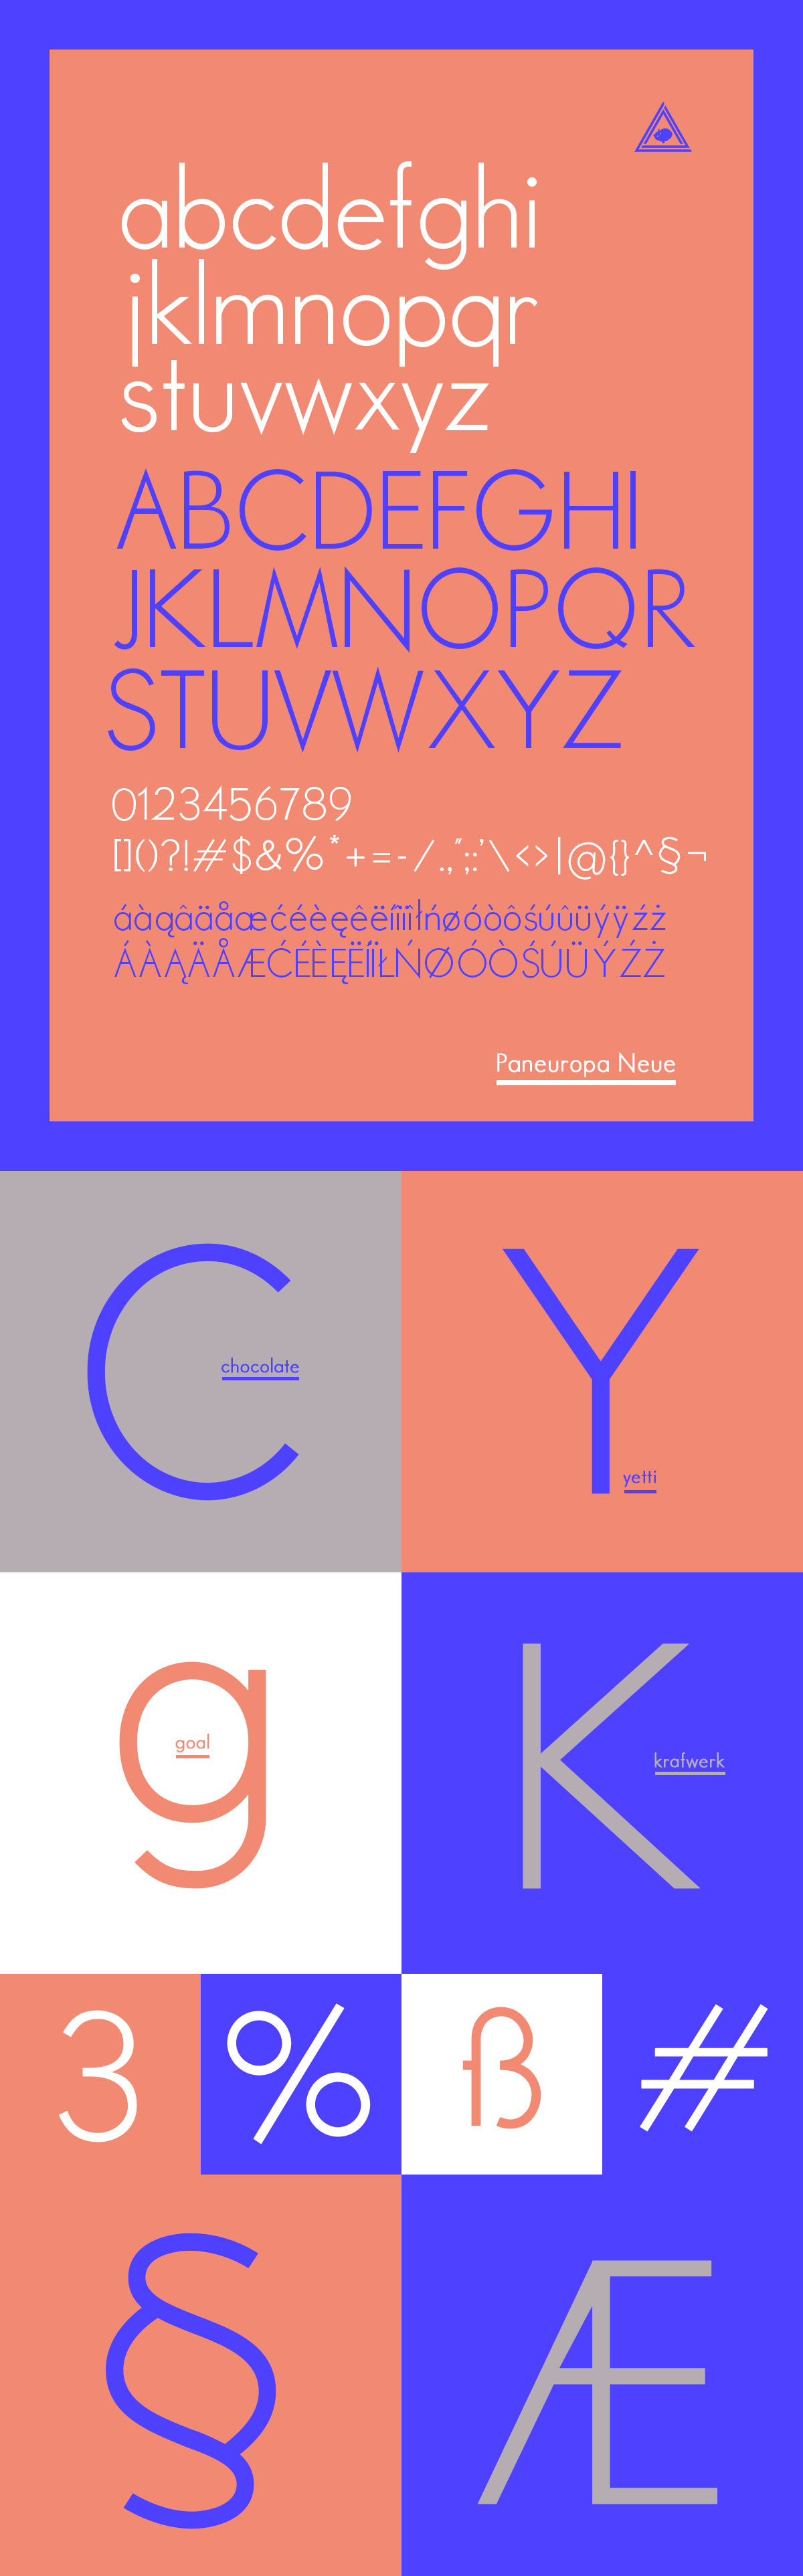 Paneuropa-Neue-free-font